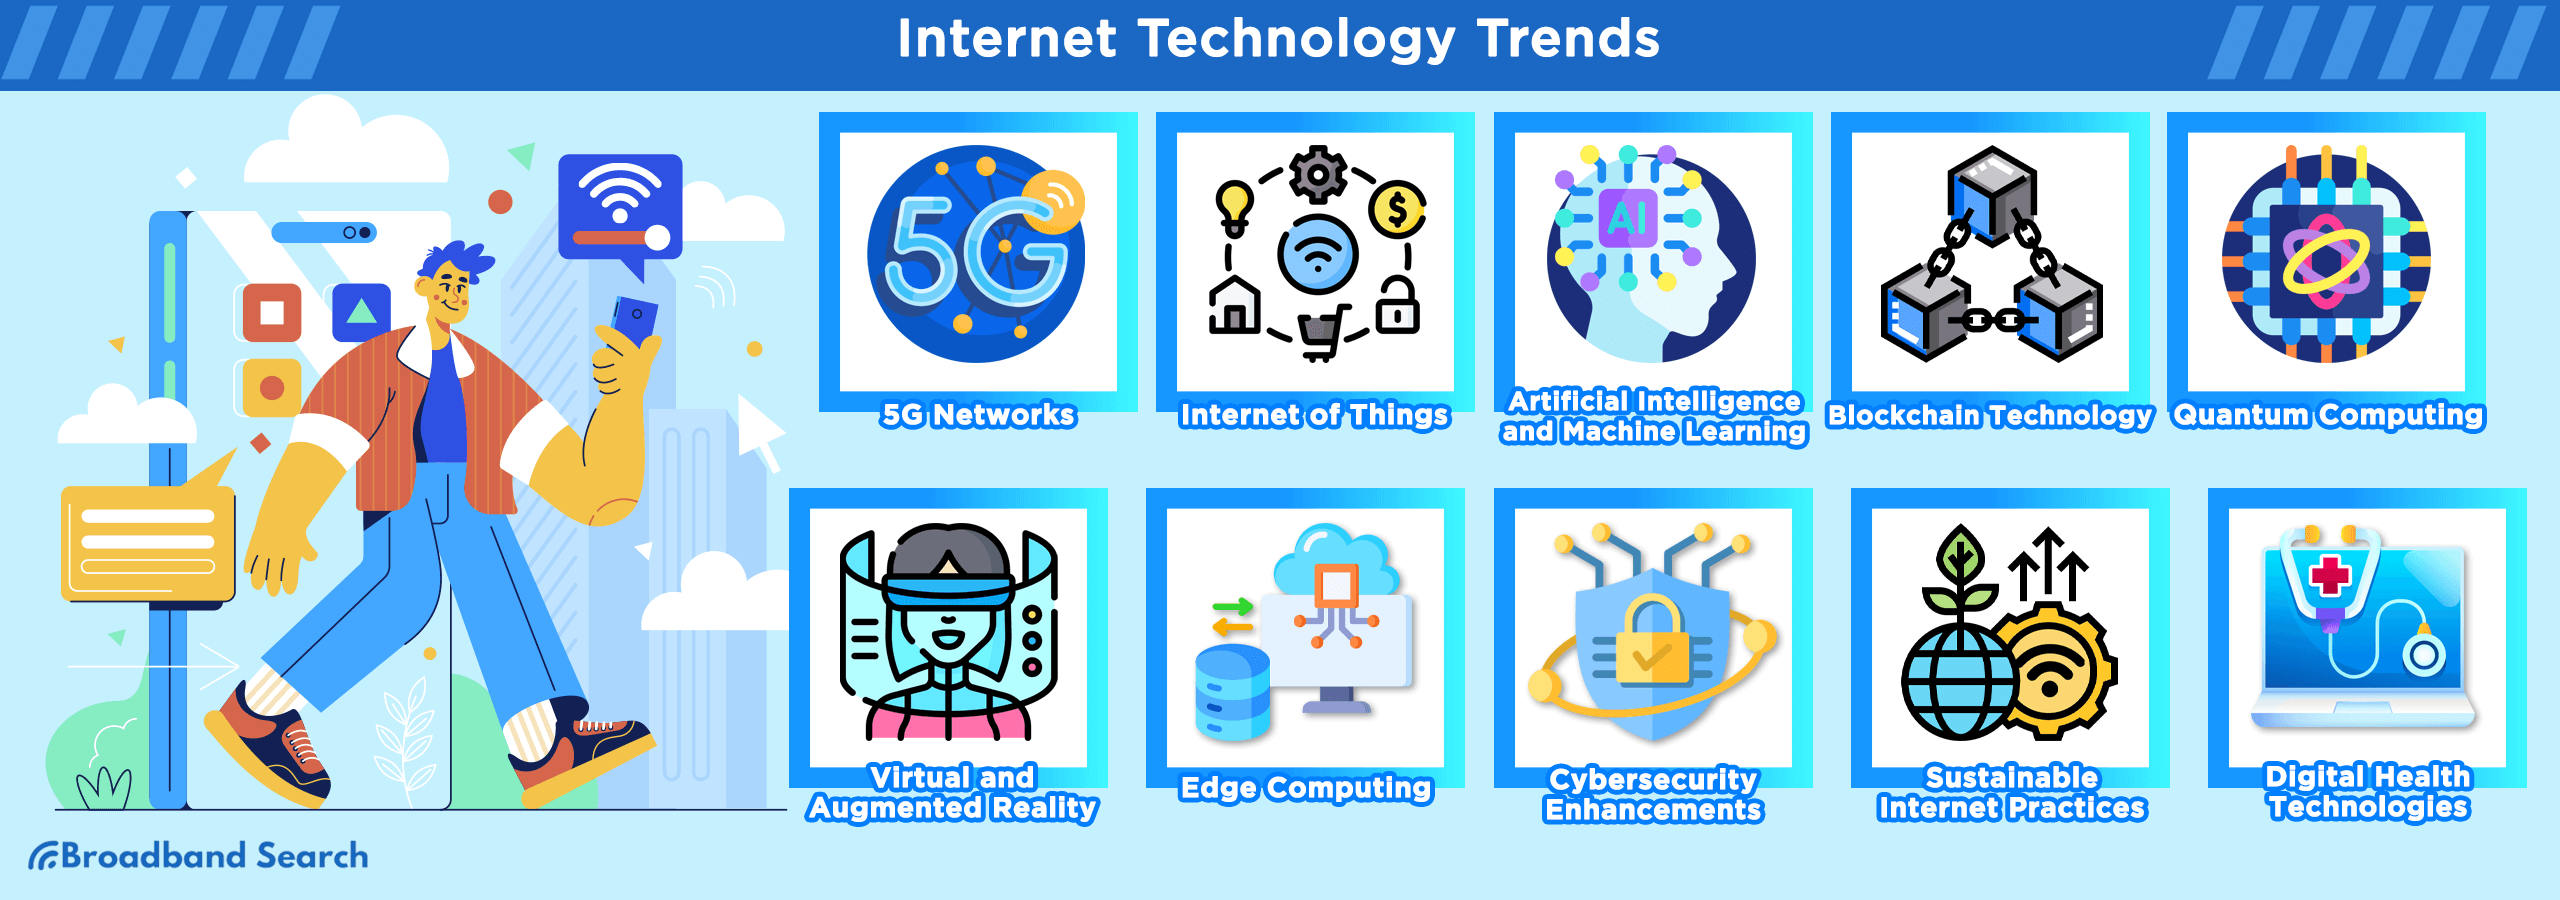 Internet technology trends